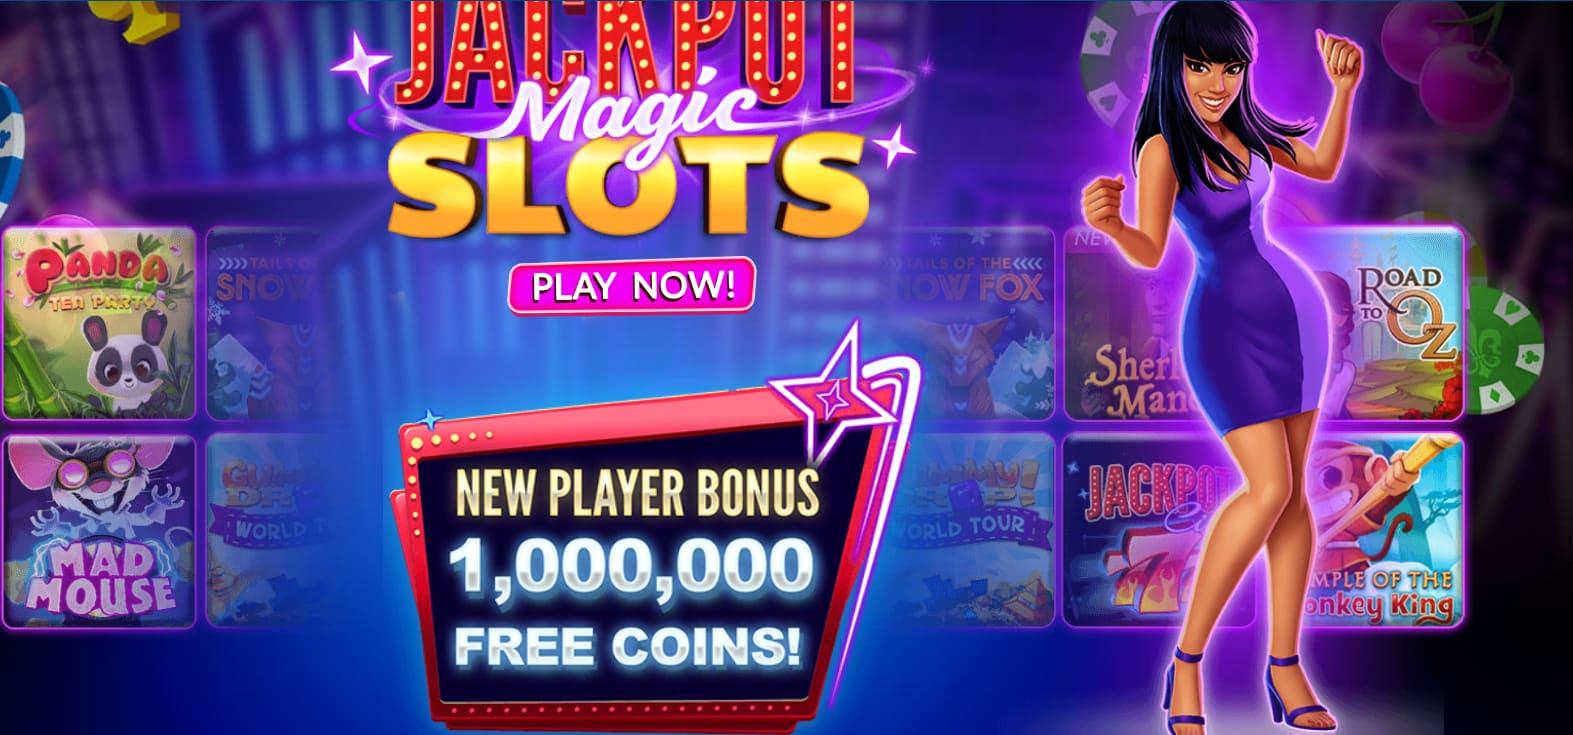 Welcome Bonus – Get 1,000,000 Jackpot Magic Slots